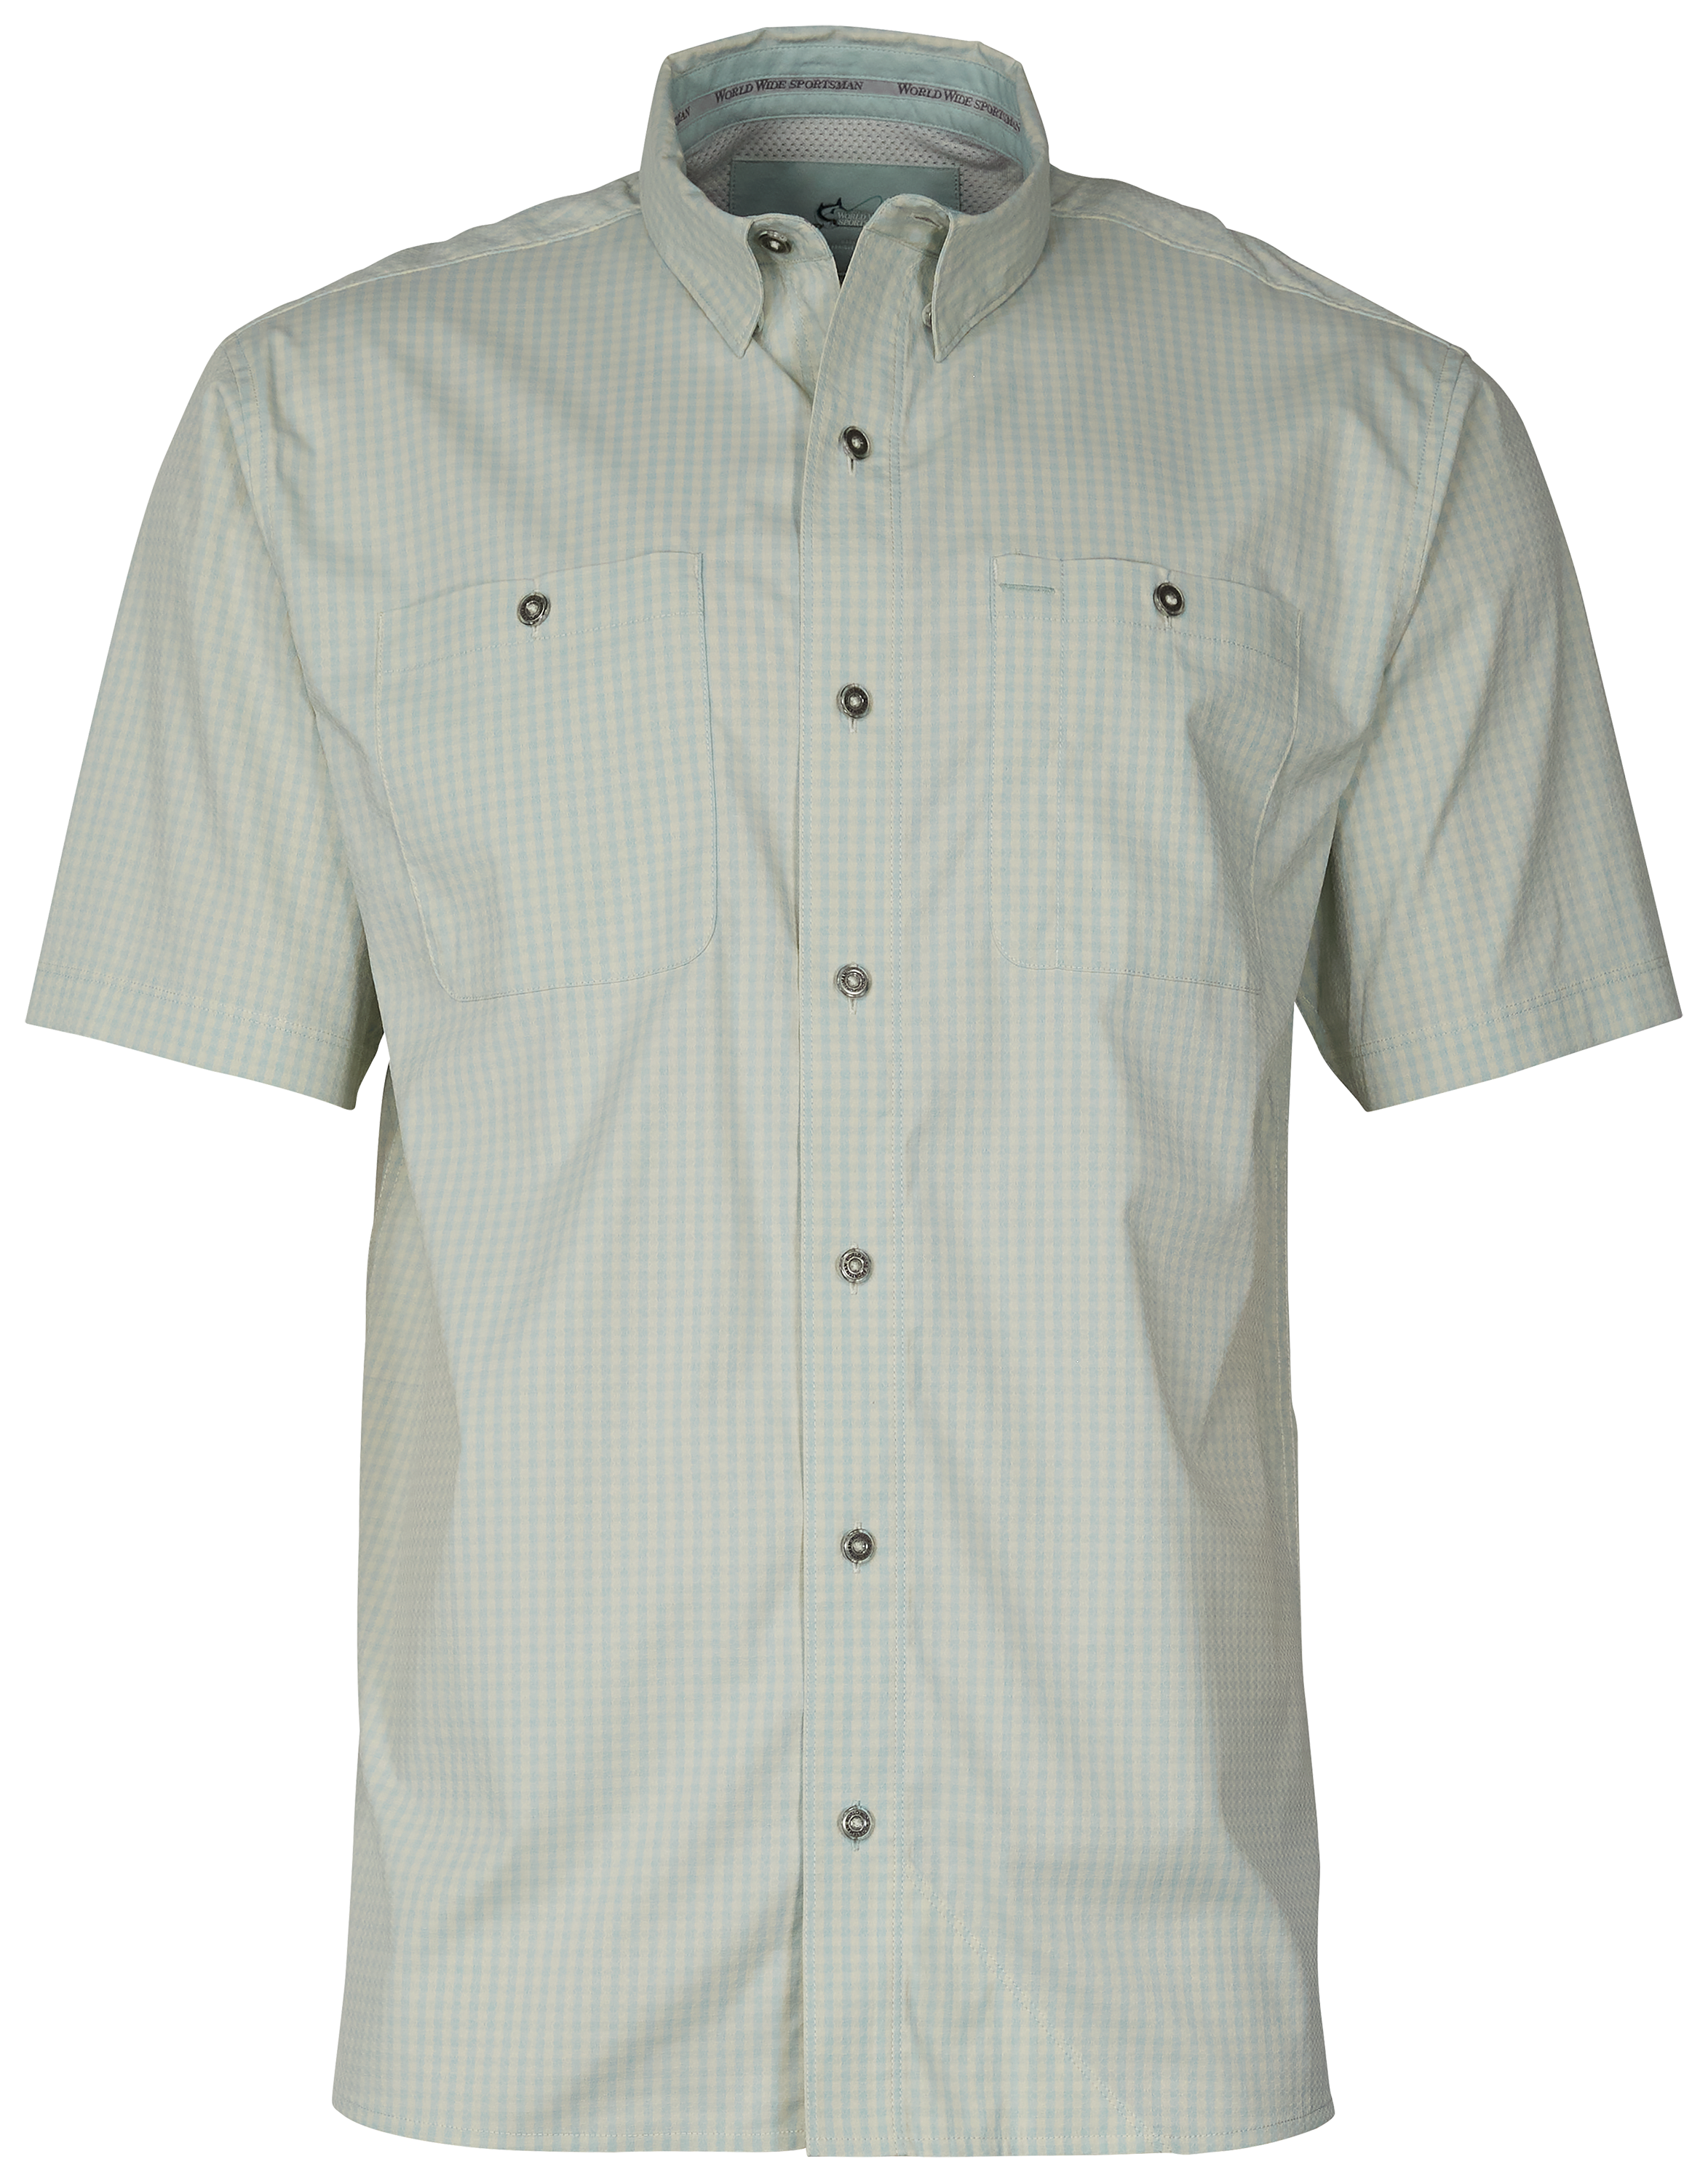 World Wide Sportsman Ultimate Angler Plaid Short-Sleeve Shirt for Men - Harbor Gray Gingham - L